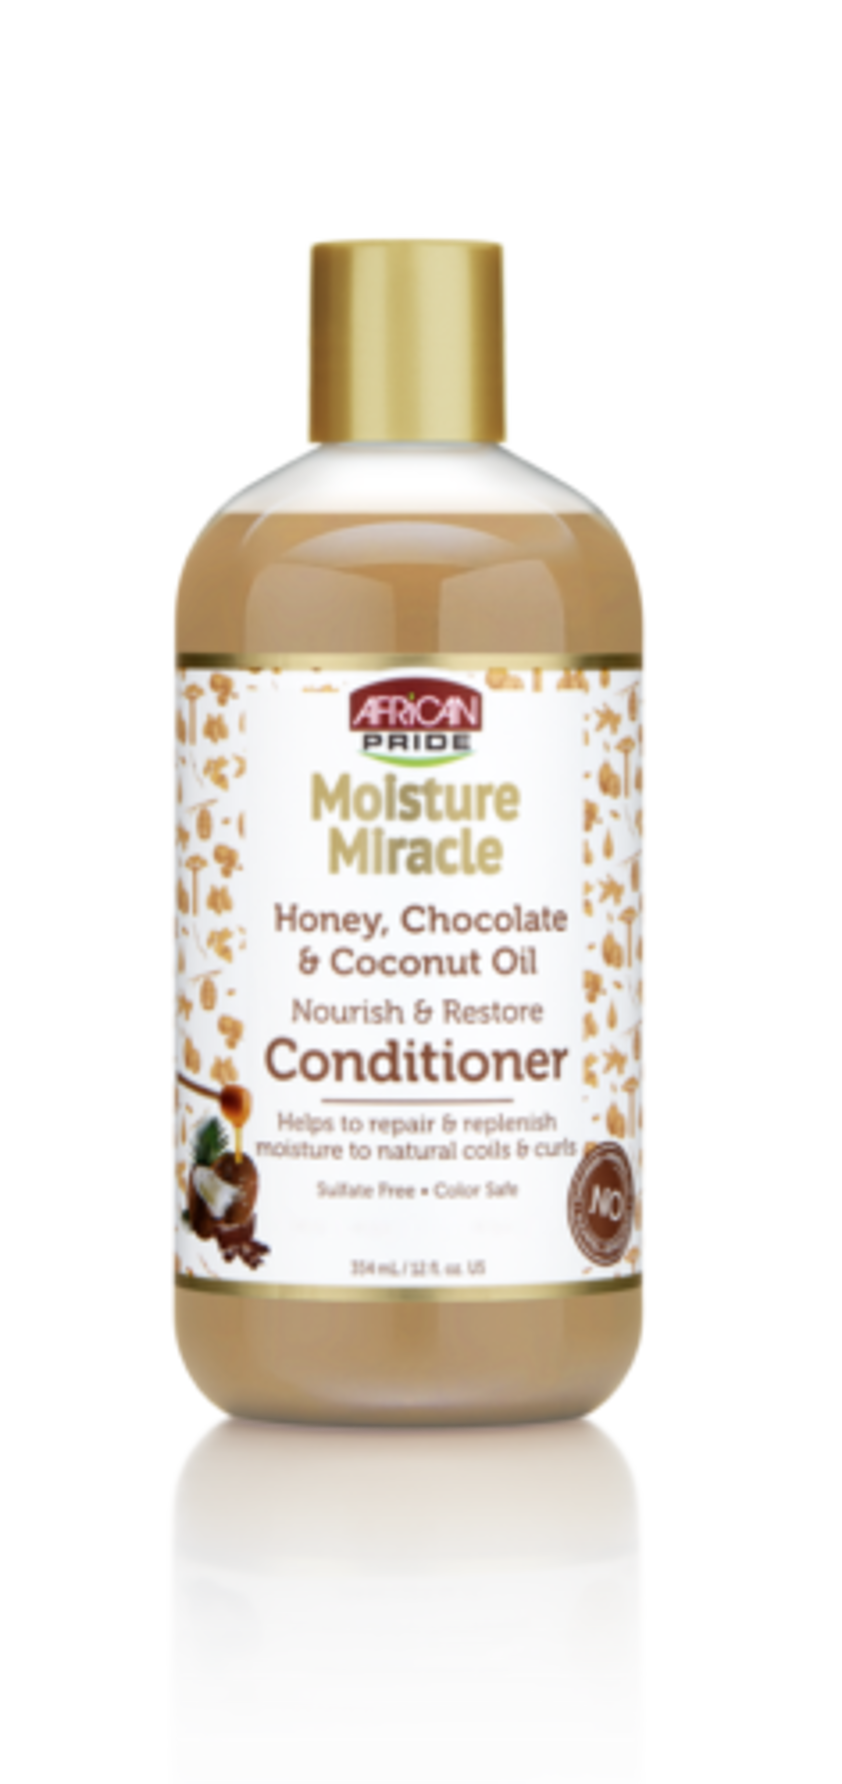 Moisture Miracle Repair & Replenish Conditioner